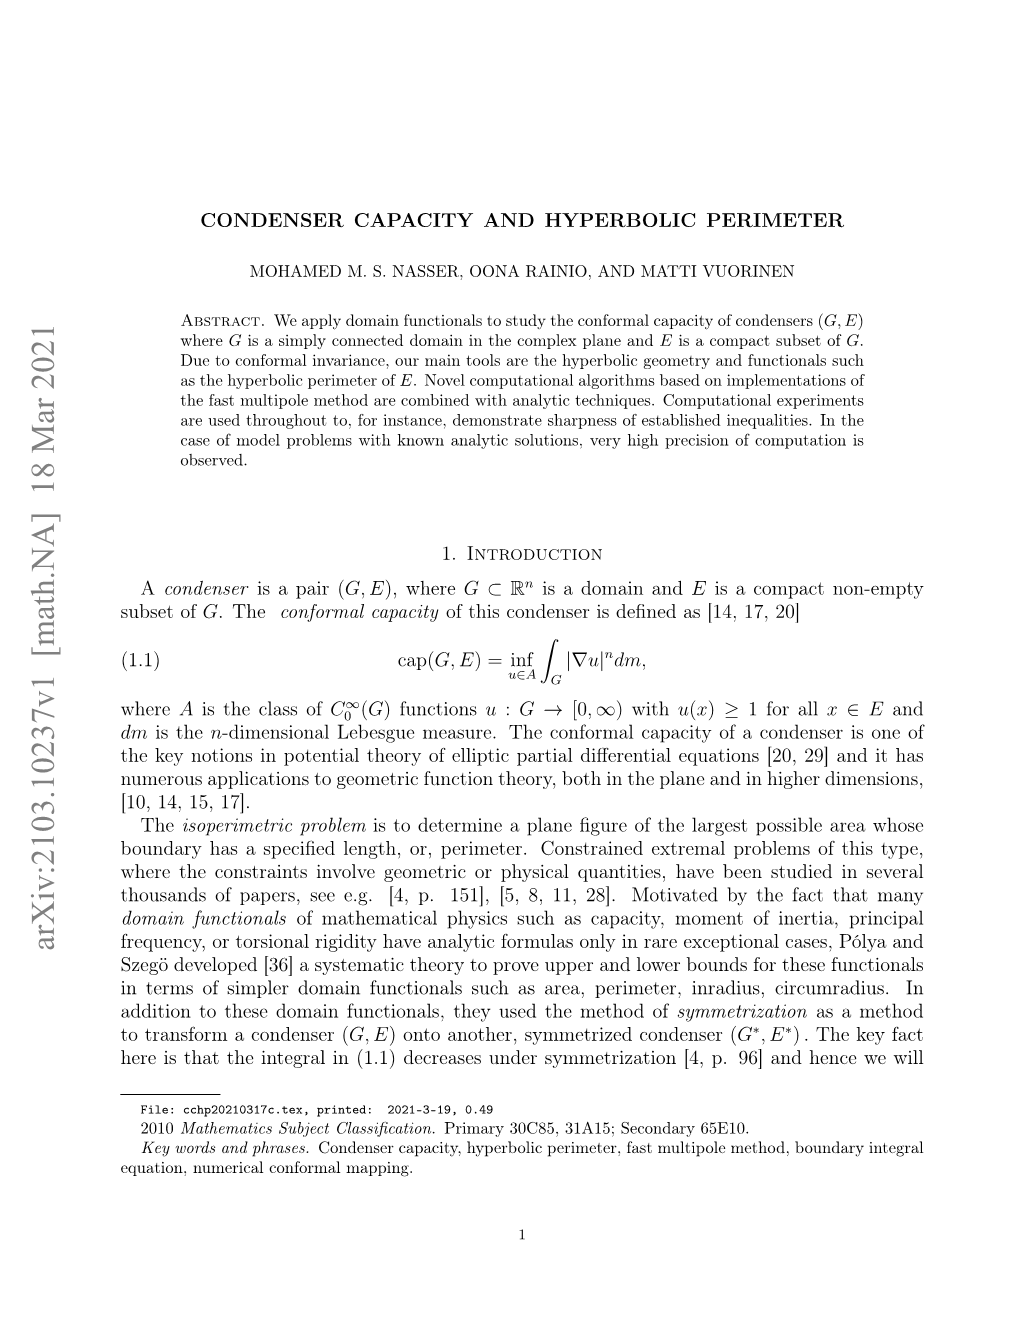 Condenser Capacity and Hyperbolic Perimeter